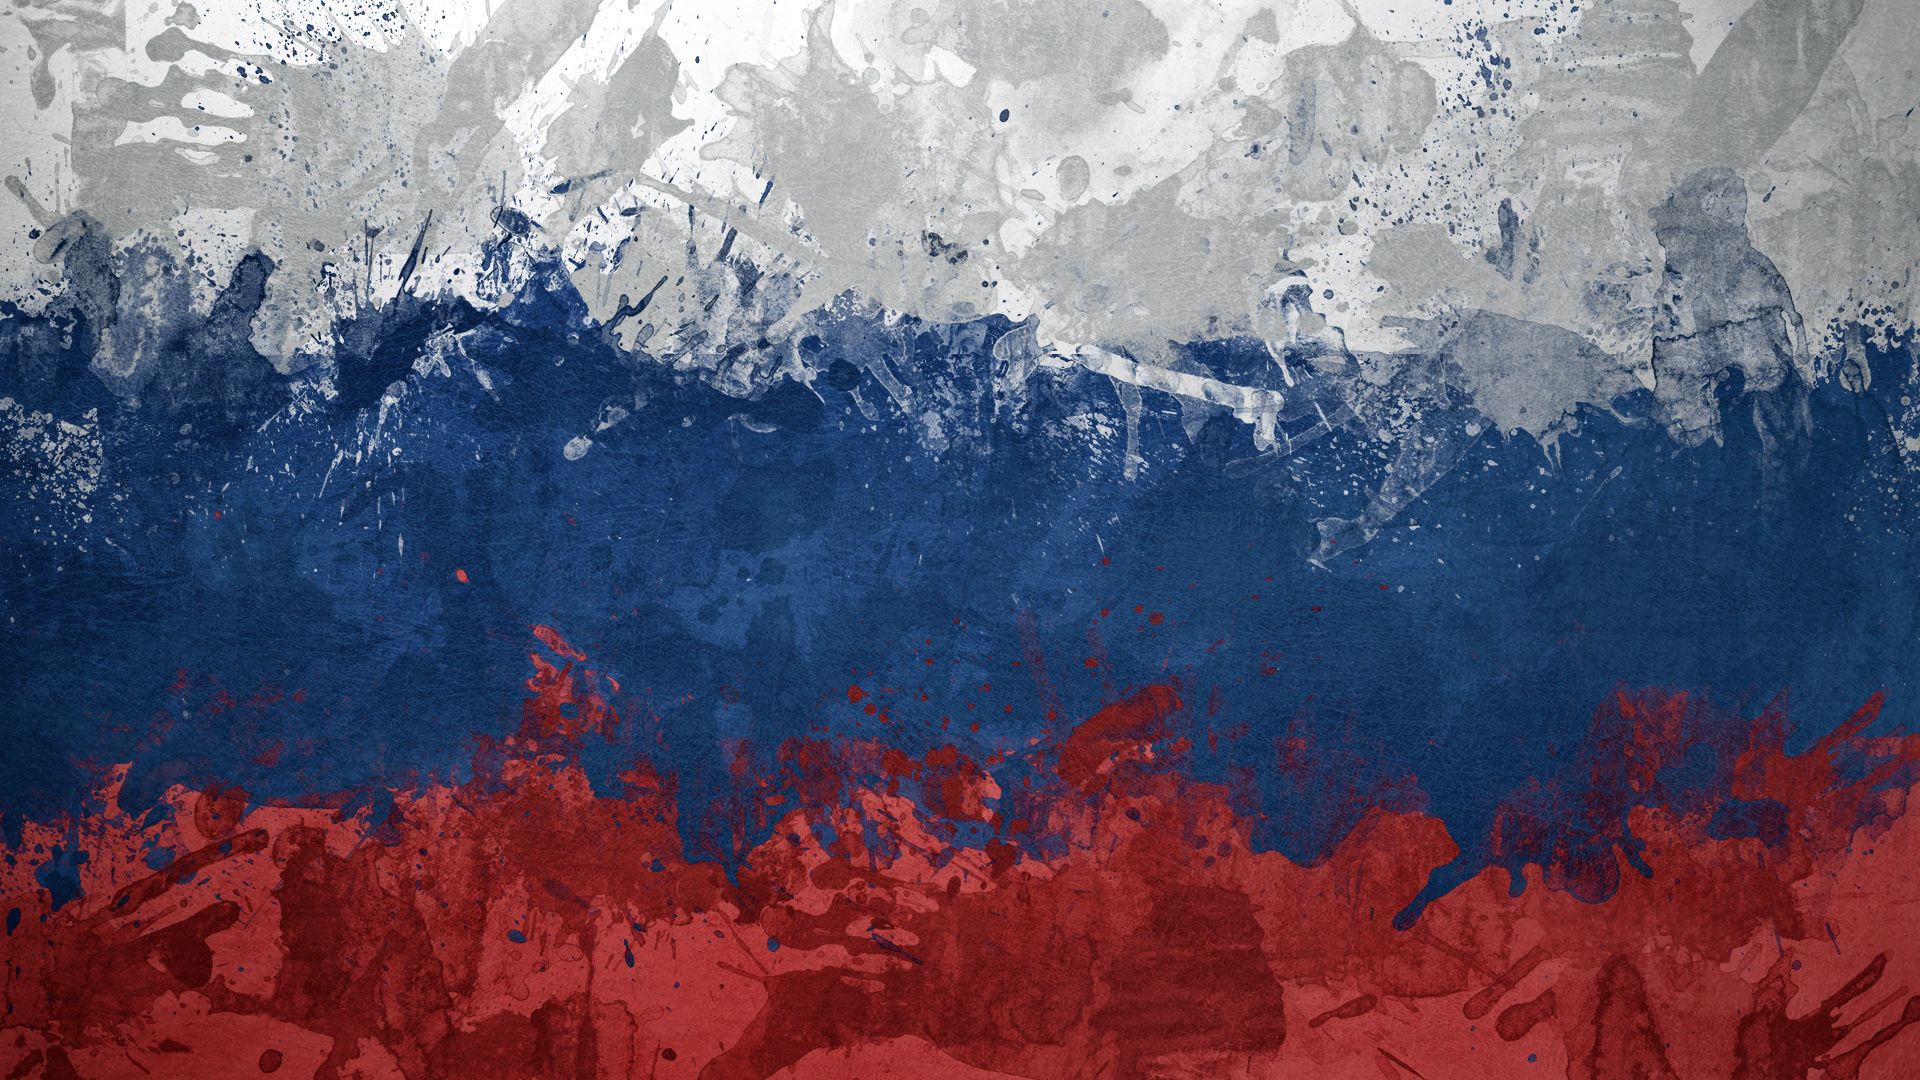 russia, textures, stains, texture, paint, spots, flag, symbolism